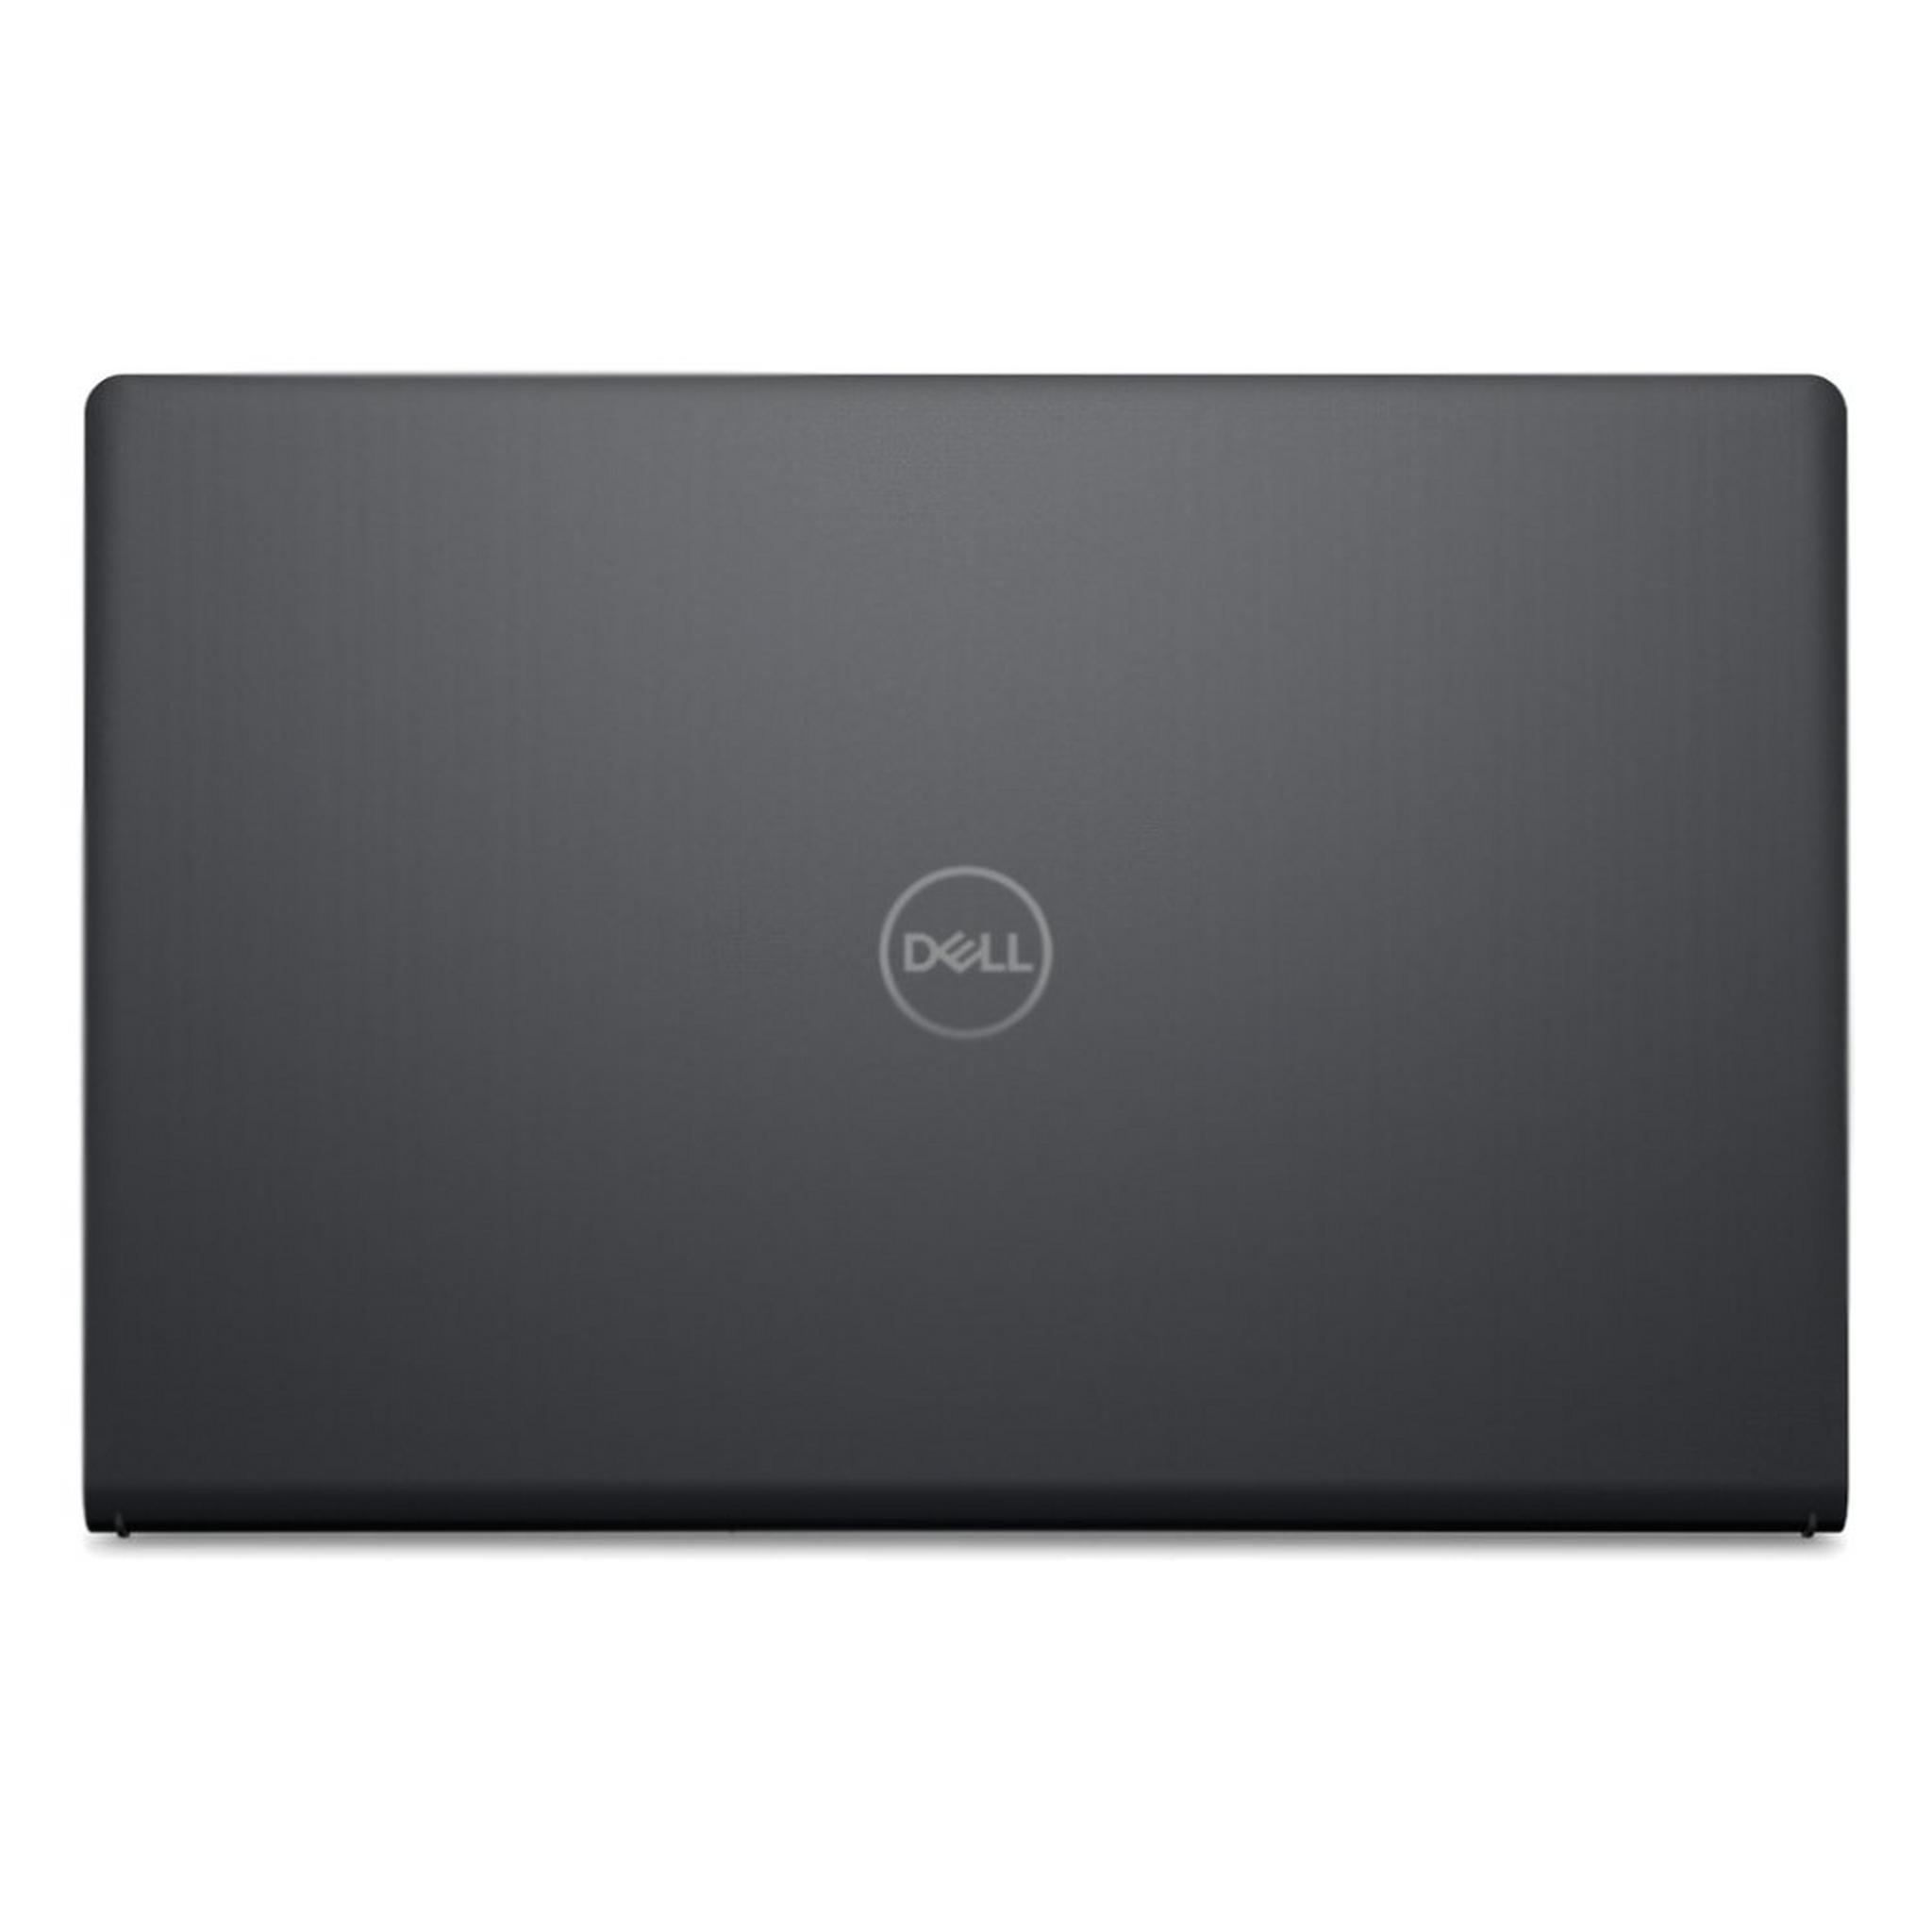 Dell Vostro 3510 Intel Core i5 10th Gen, 8GB RAM, 256GB SSD, 15.6-inch Laptop - Grey